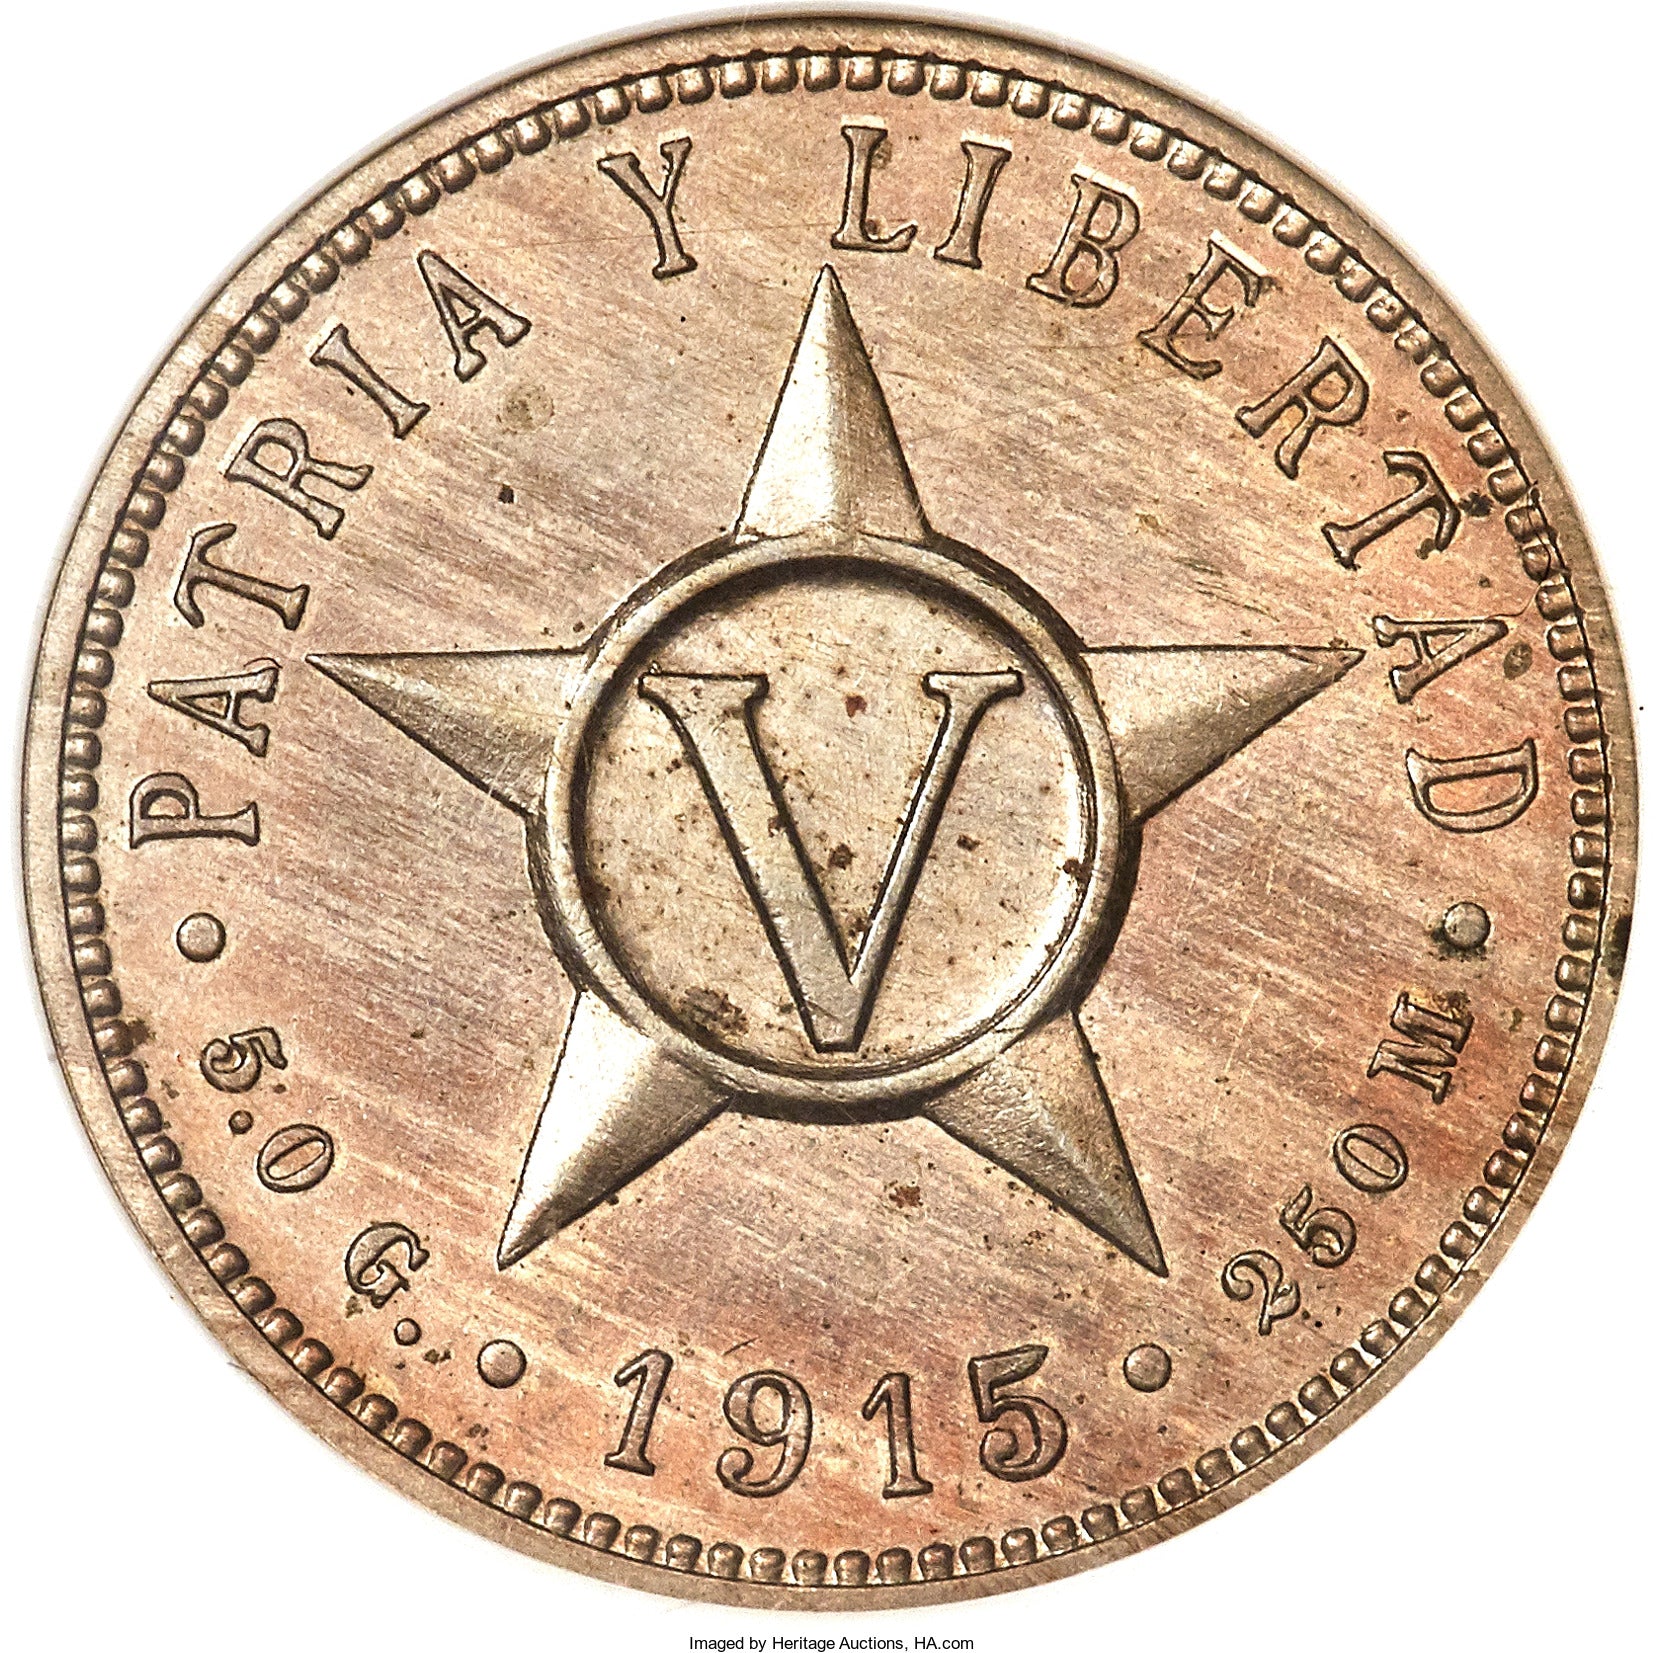 Cuba Republic Proof 5 Centavos 1915 PR-64 NGC - Proof Coin 